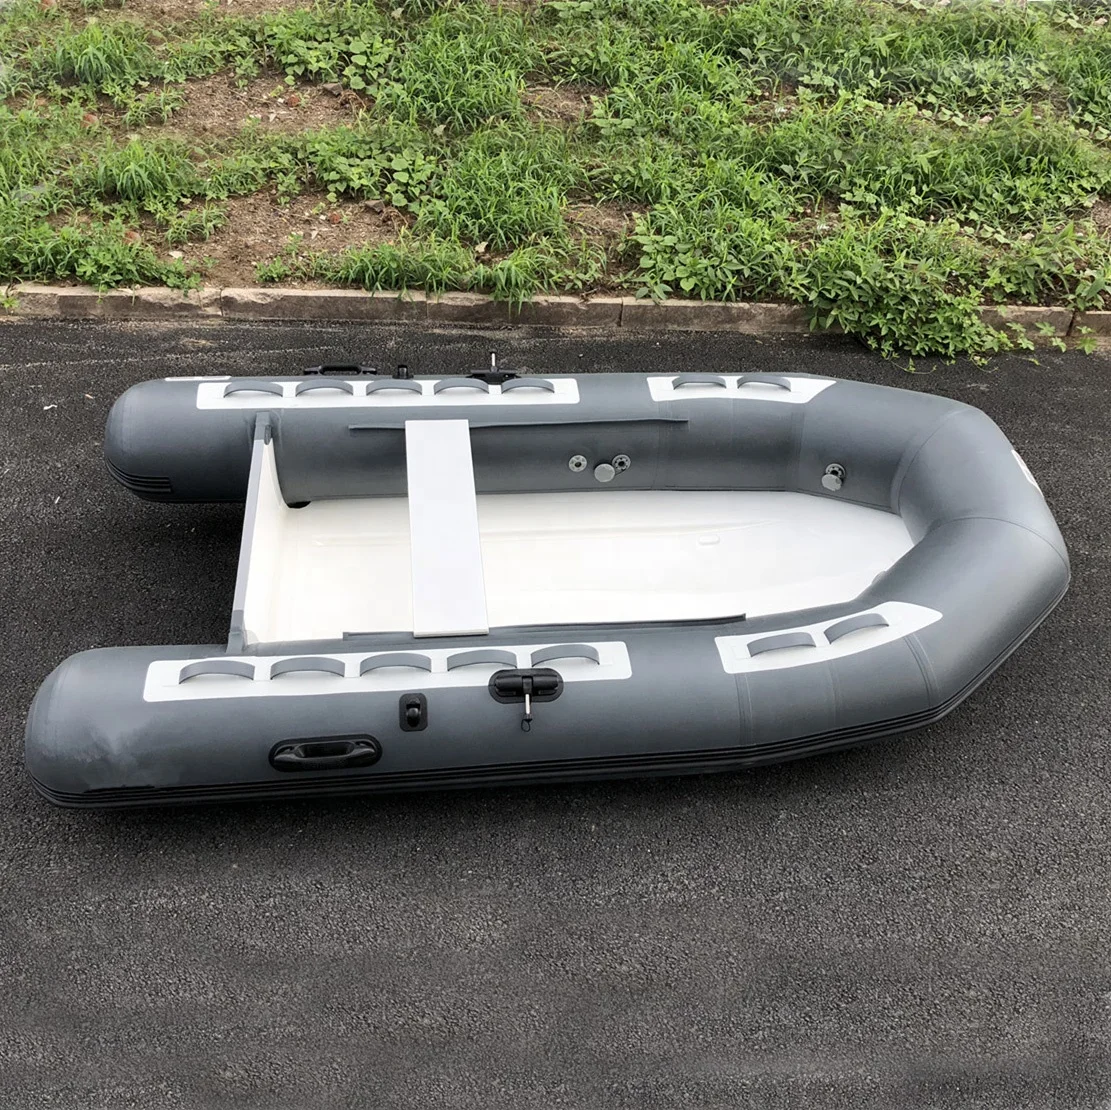 Liya 3m/11ft mini folding rigid hull inflatable rib boats